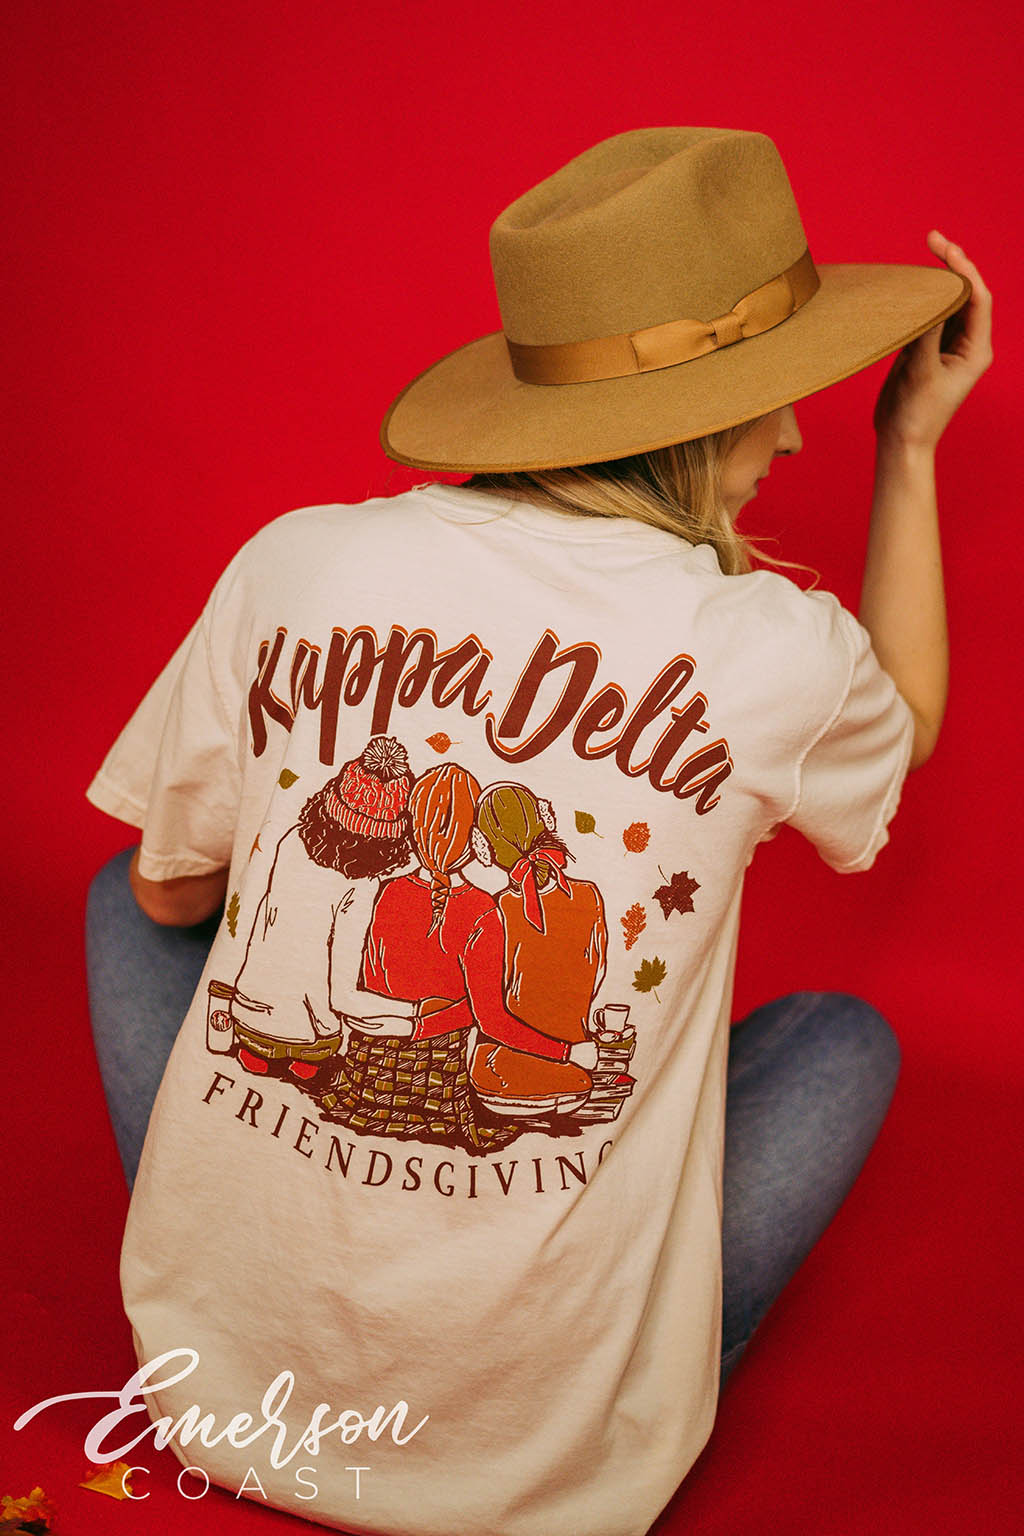 Kappa Delta Friendsgiving T-shirt